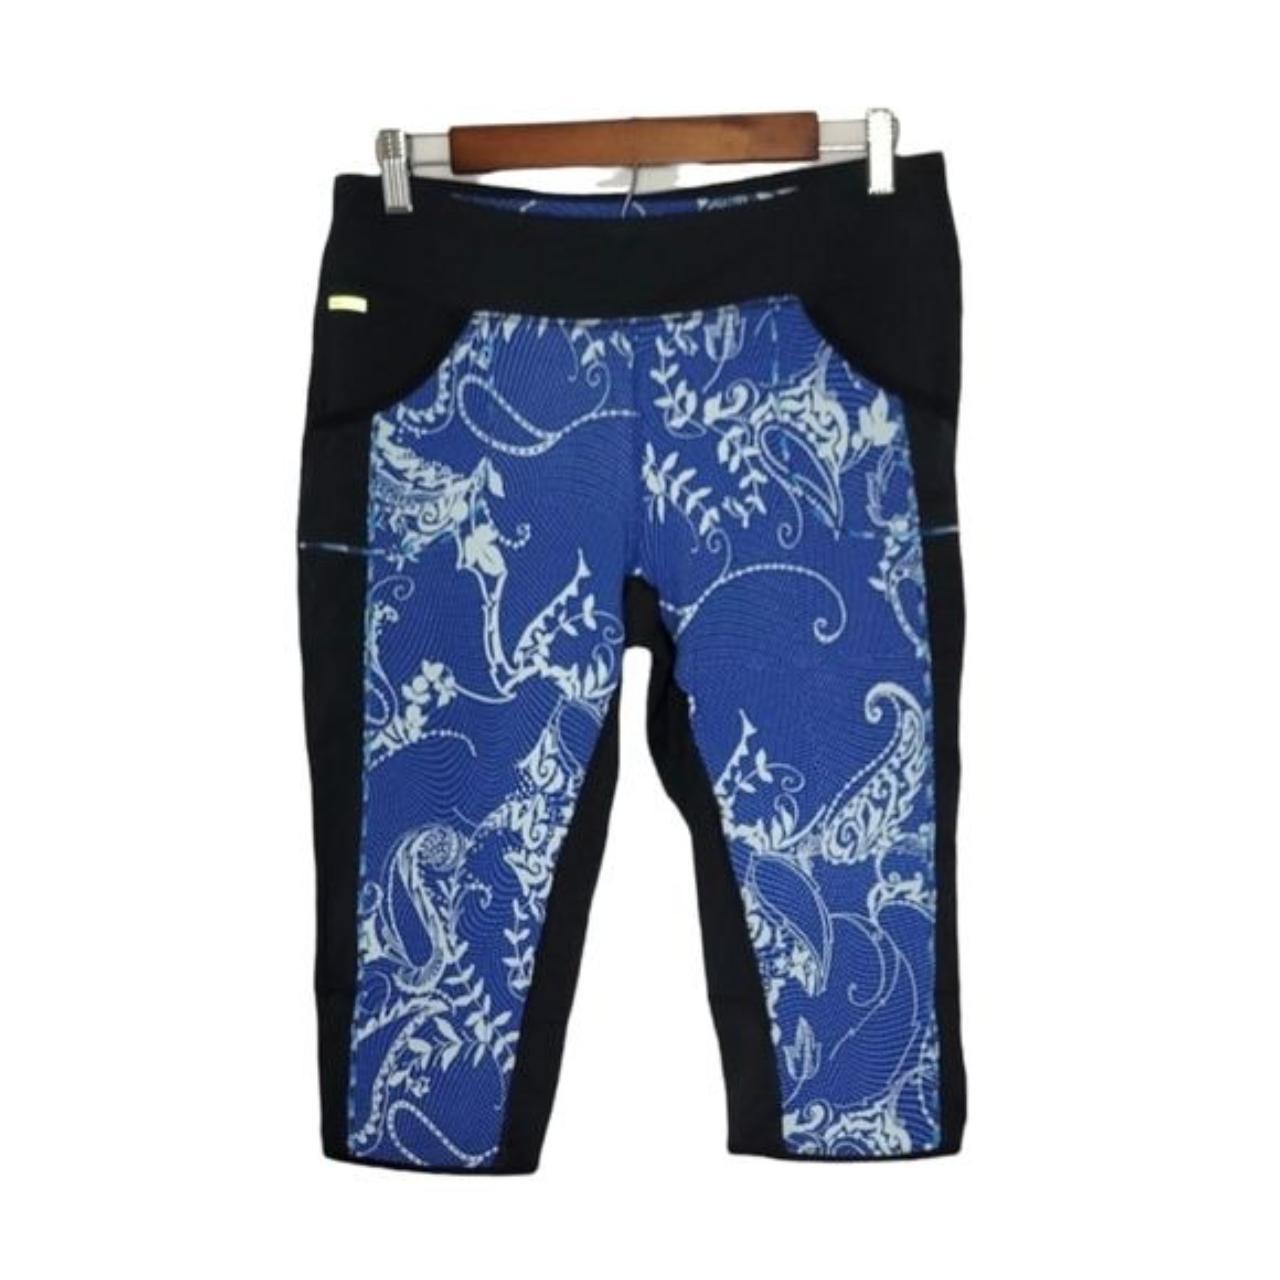 Lole capri athletic leggings, blue paisley vining - Depop